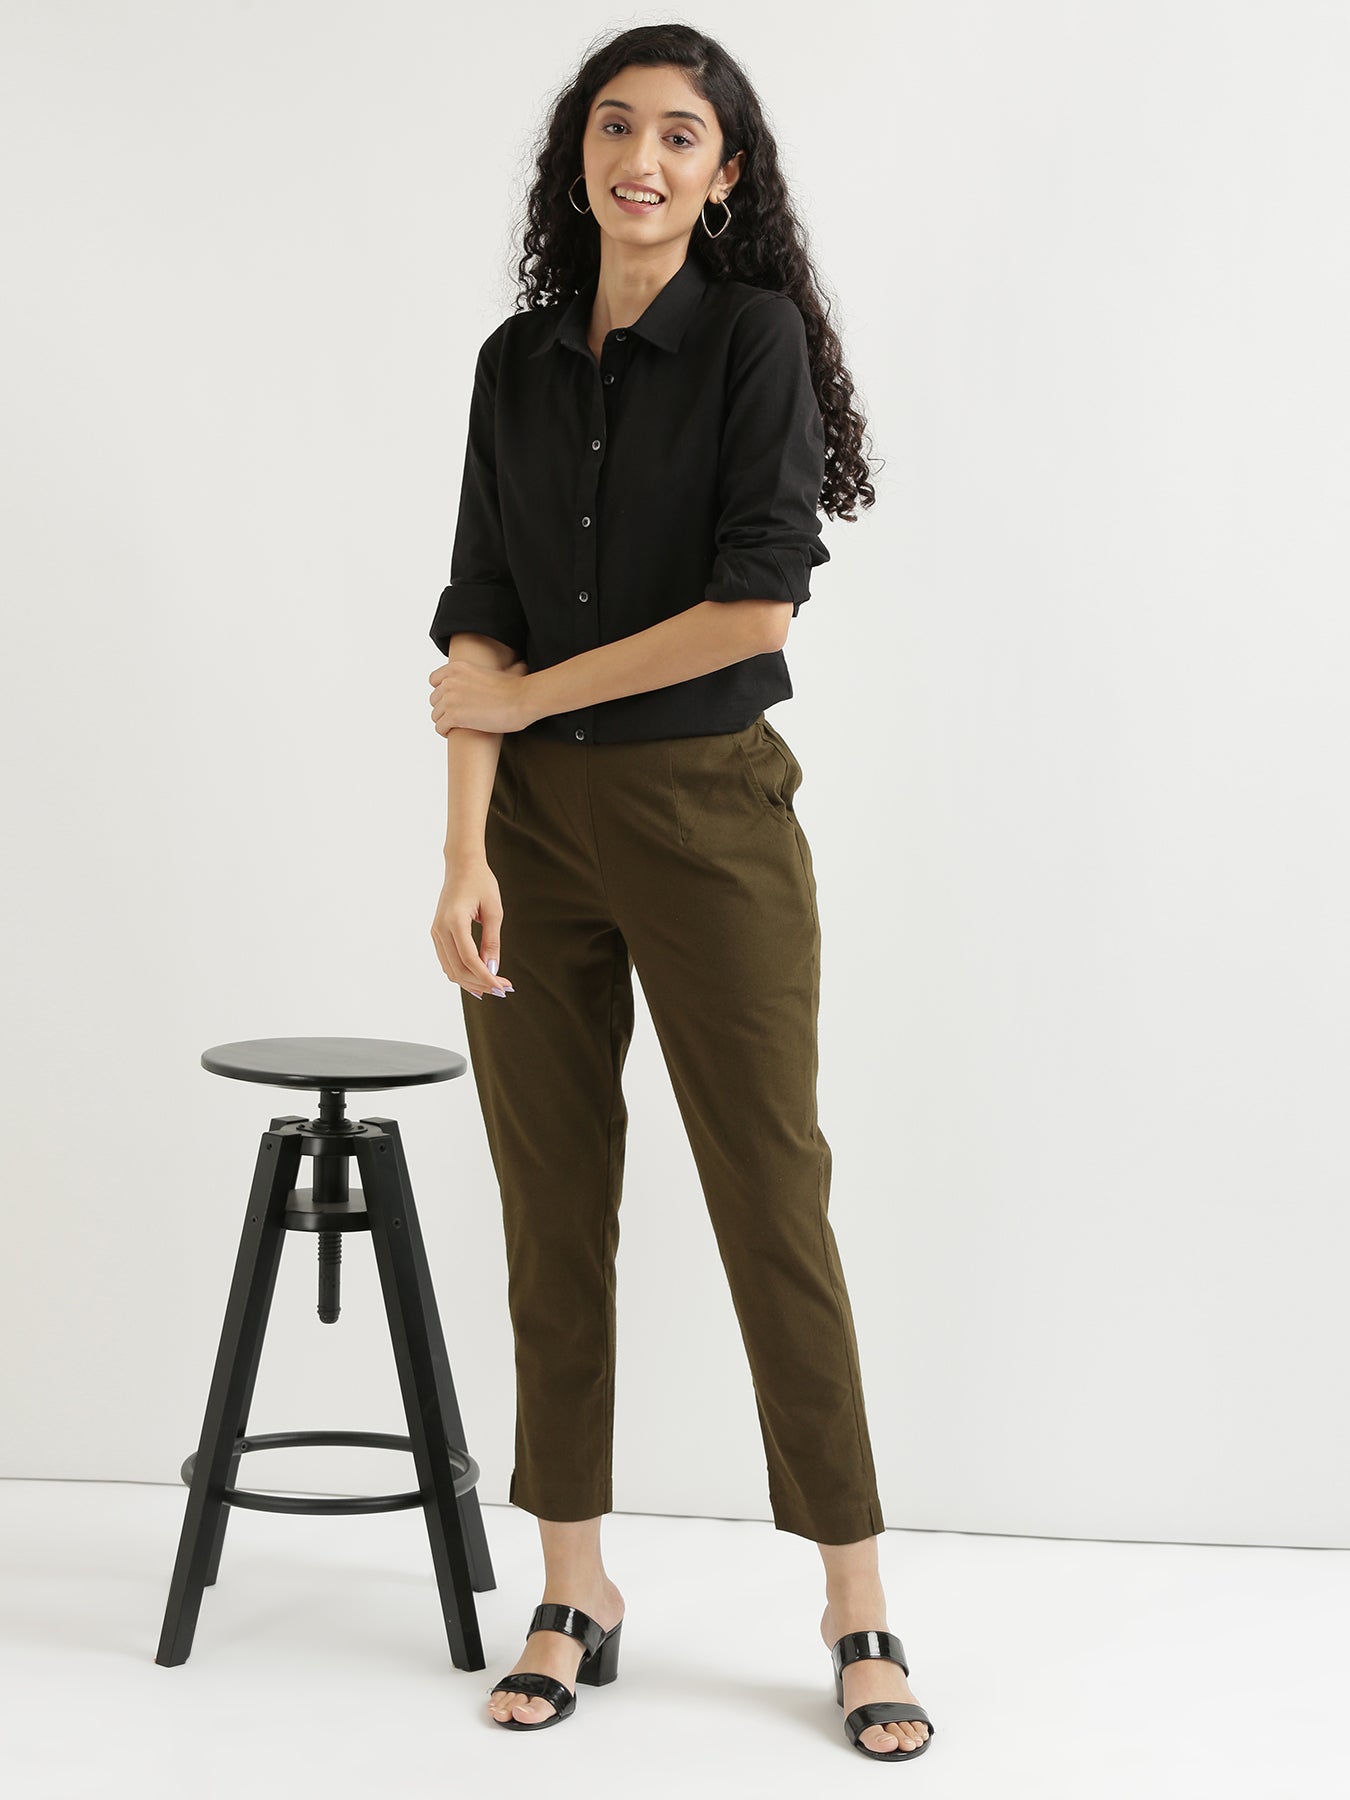 Madame Olive Trouser | Buy COLOR Olive Trouser Online for | Glamly